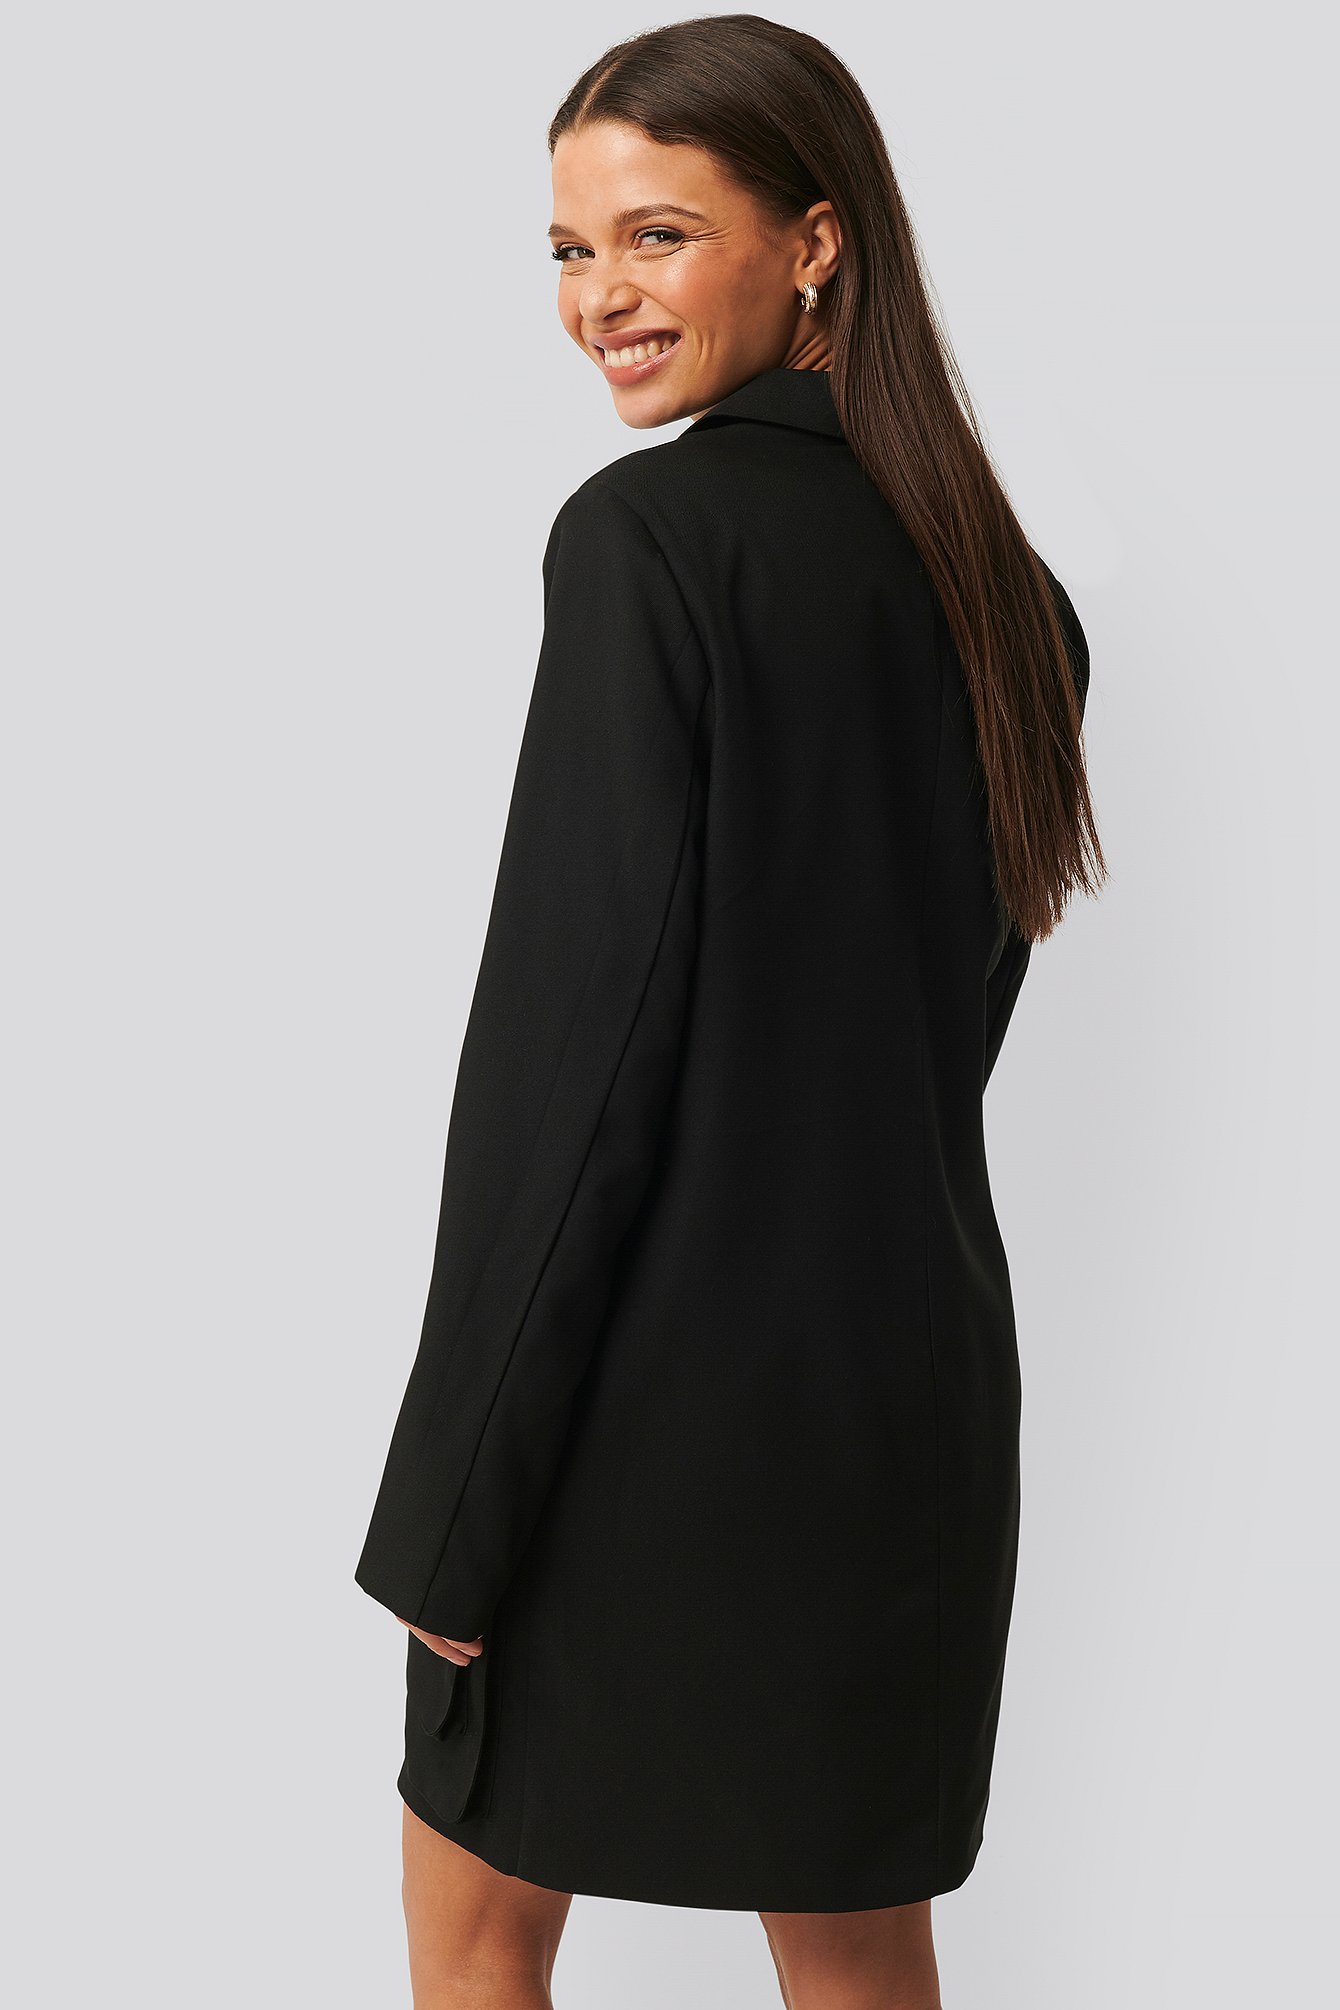 Black Pocket Blazer Dress